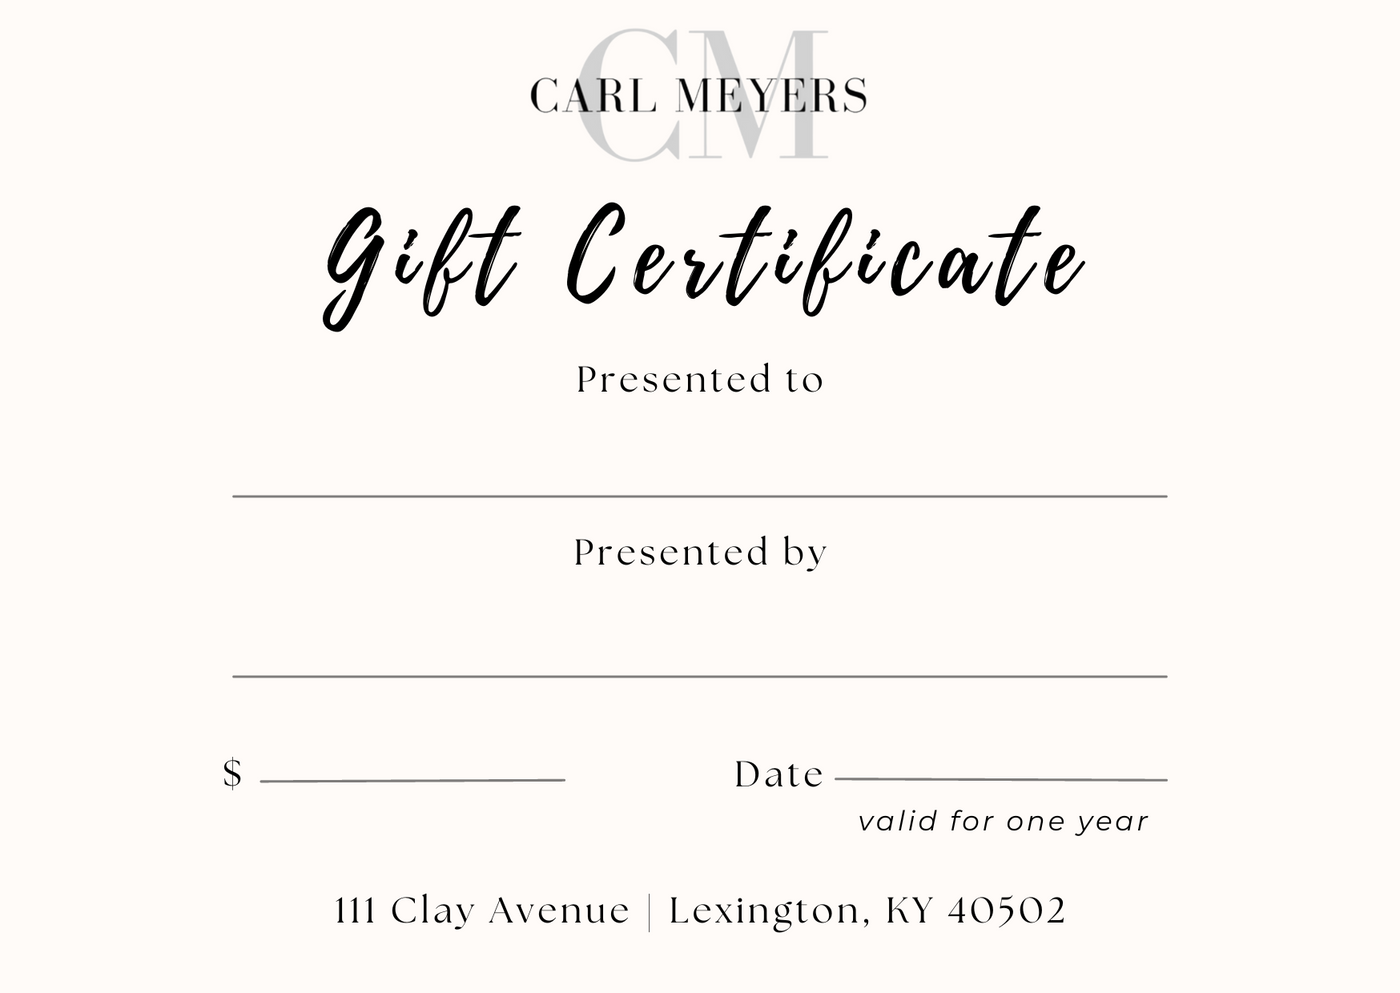 Carl Meyers Gift Certificate